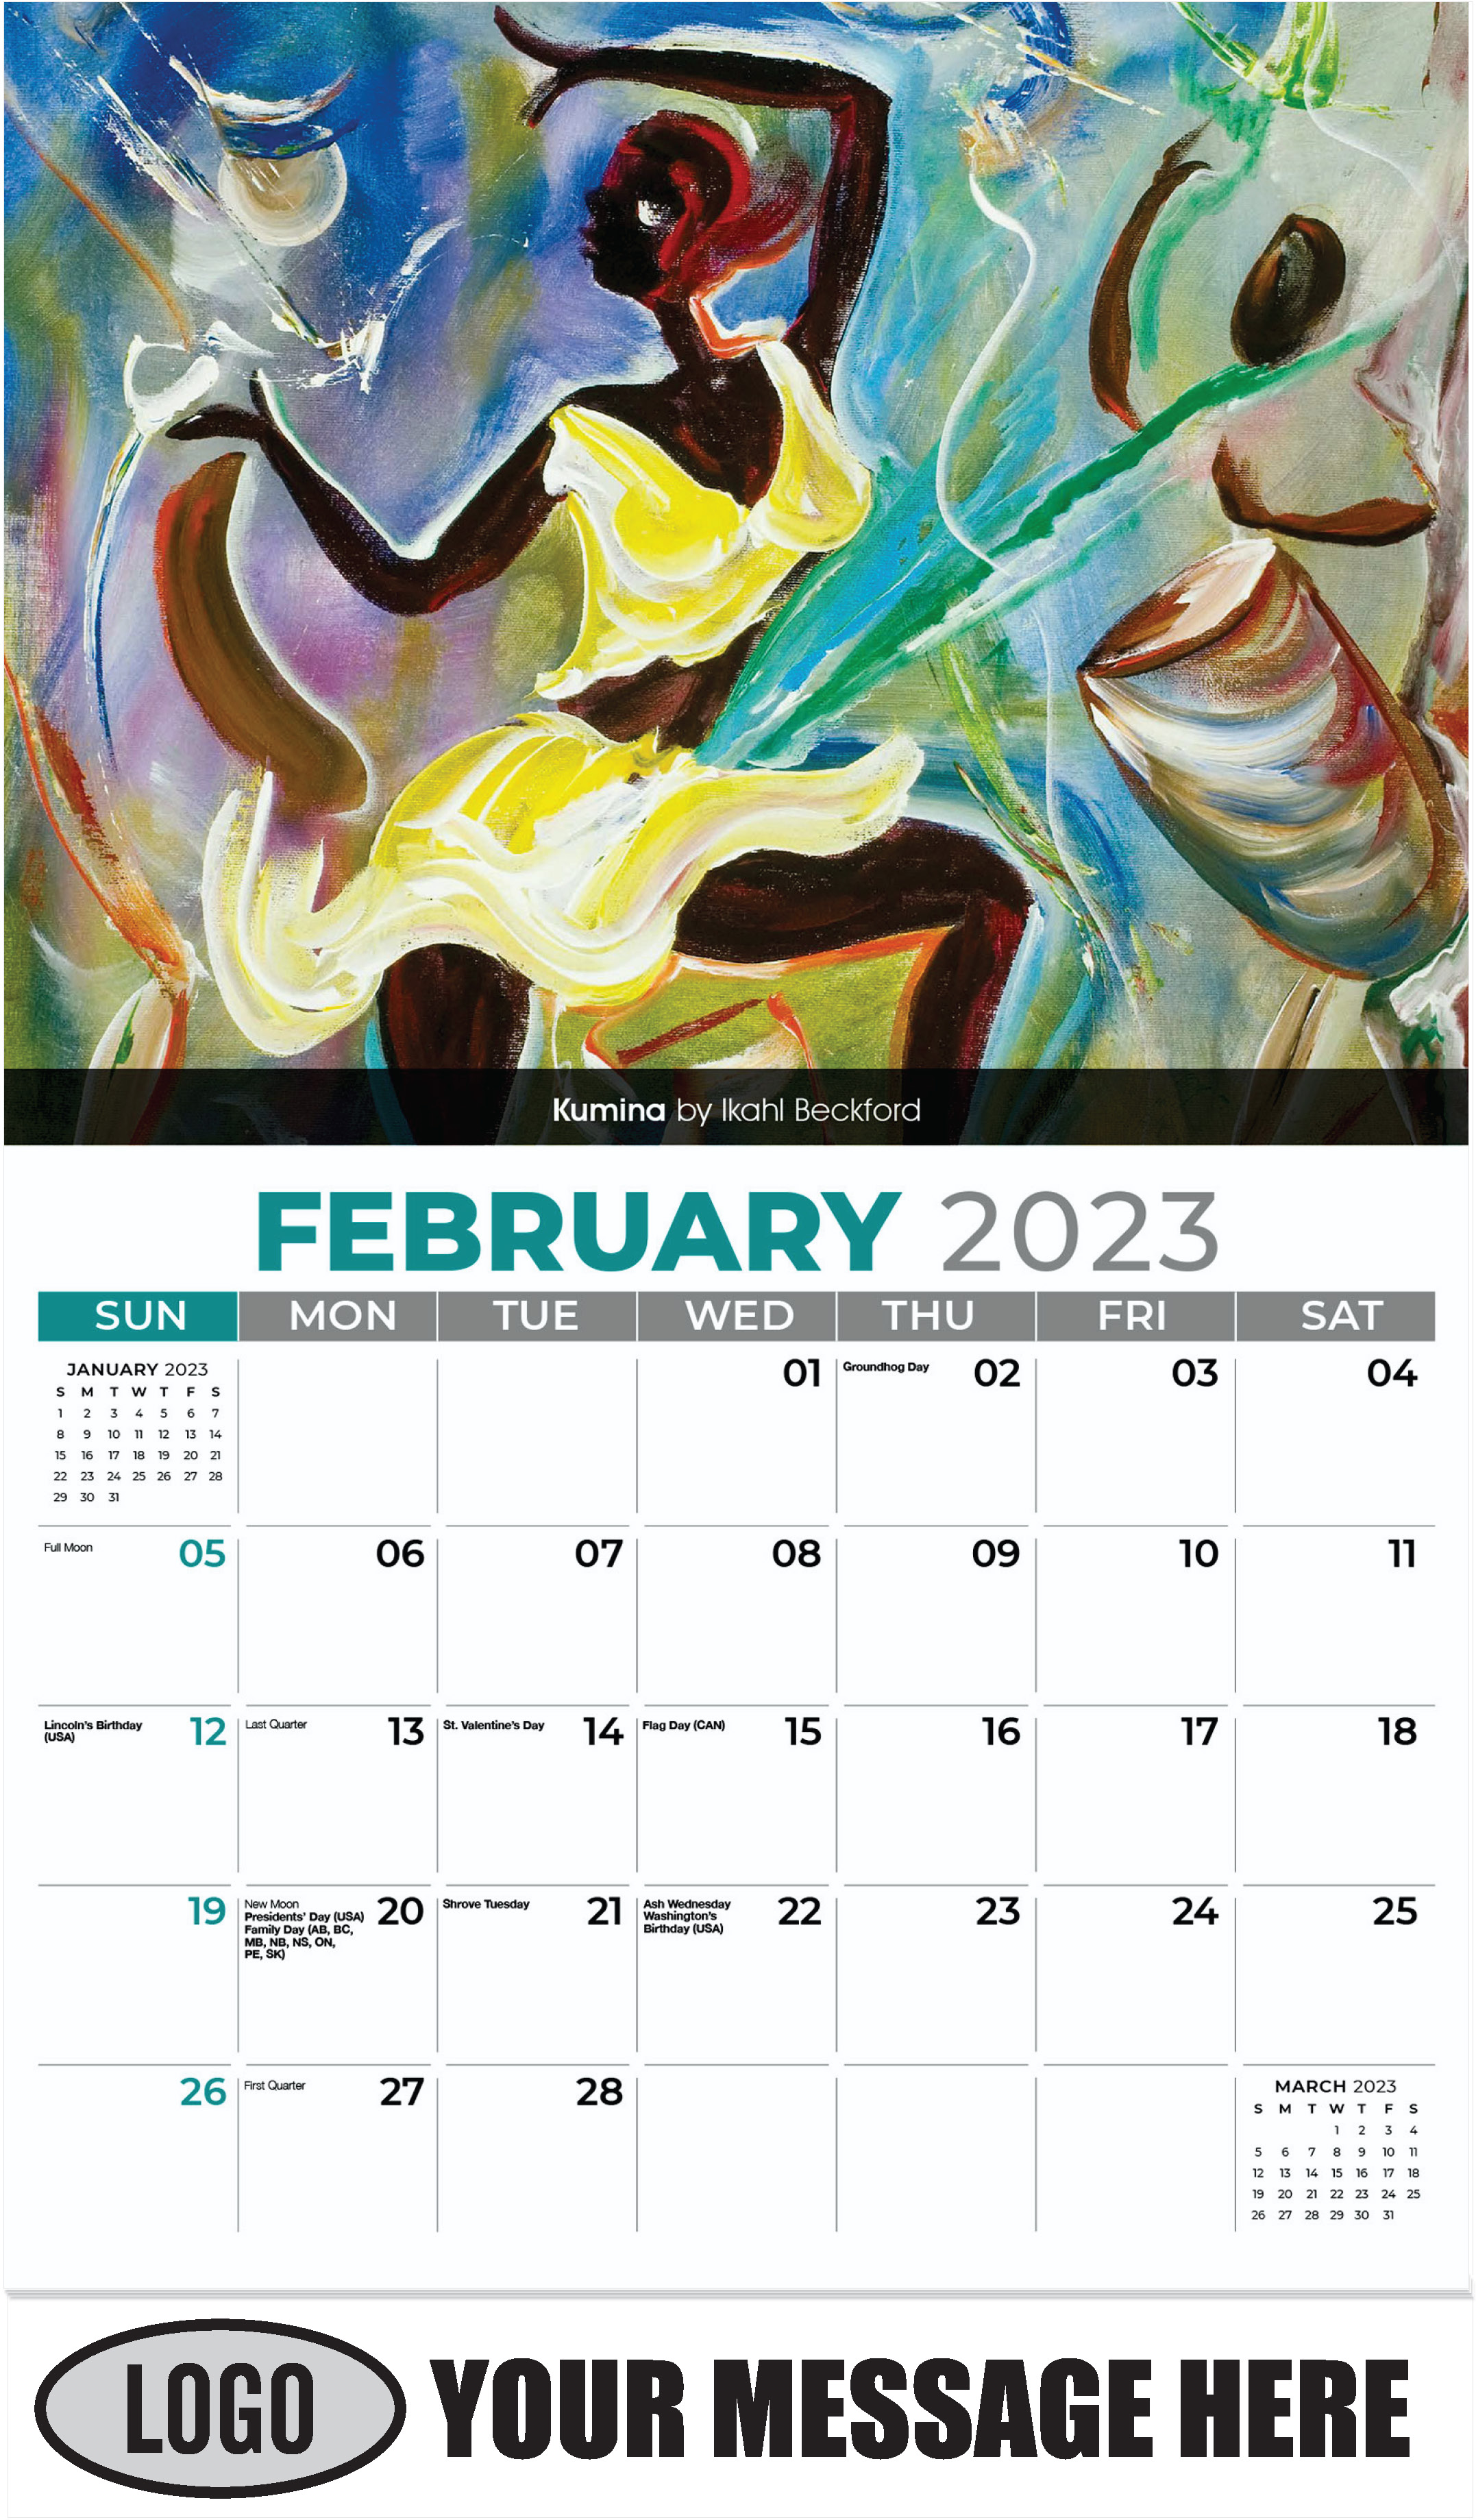 Kumina – Ikahl Beckford - February - Celebration of African American Art 2023 Promotional Calendar